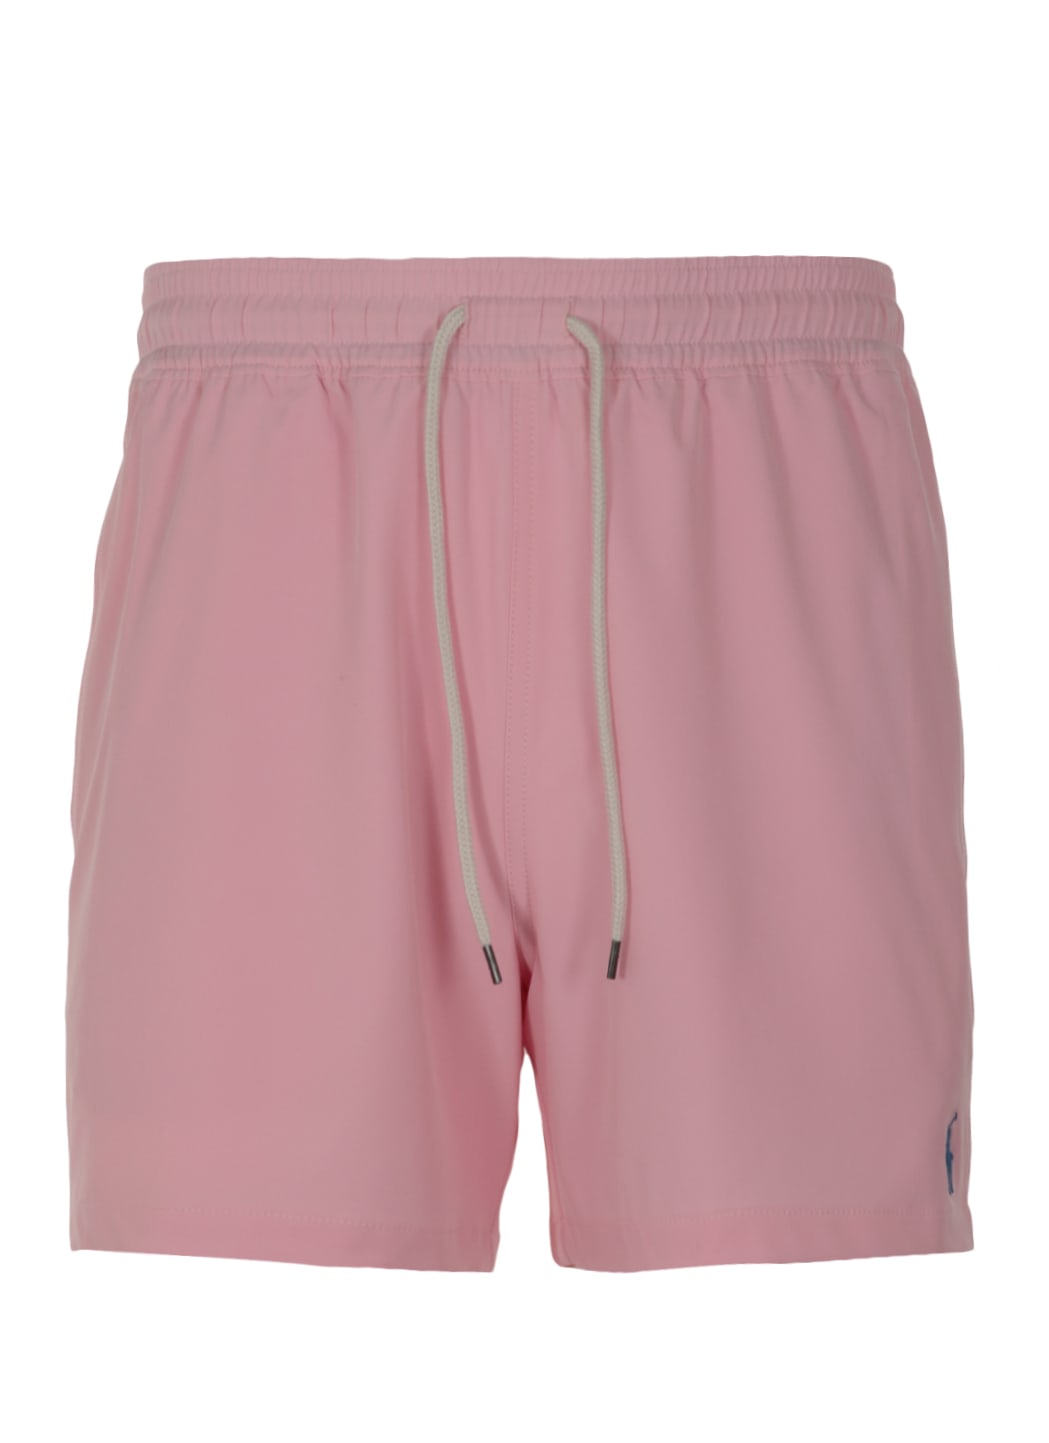 Ralph Lauren Swimsuit With Monogram In Carmel Pink